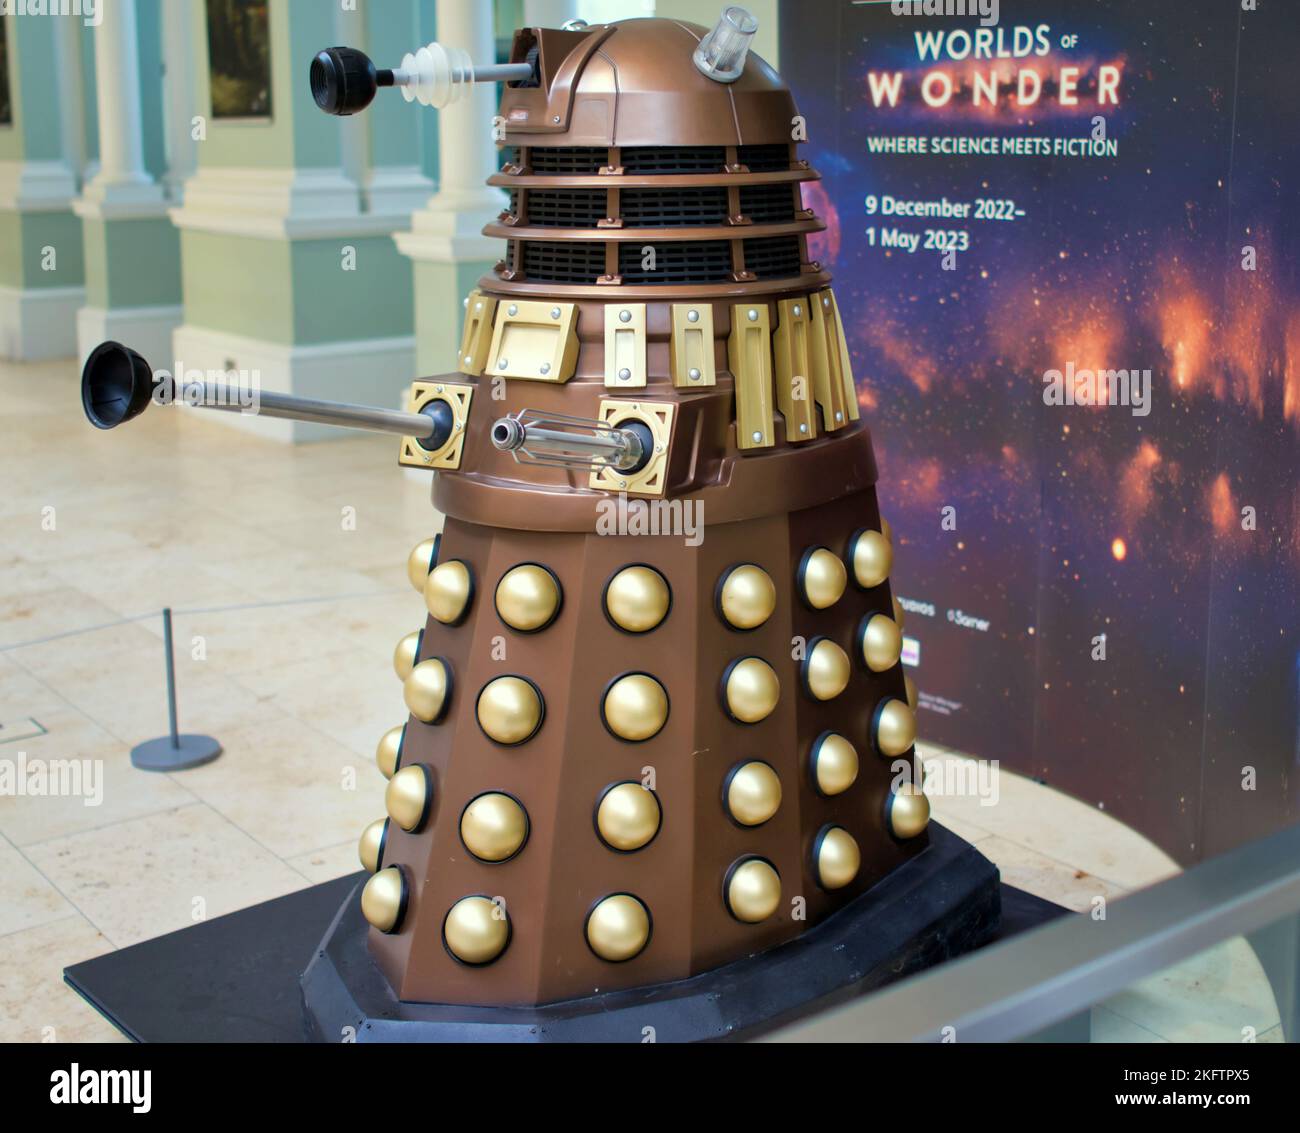 Doctor Who Worlds of Wonder Dalek National Museum of Scotland, Chambers St, Edinburgh EH1 1JF Stockfoto